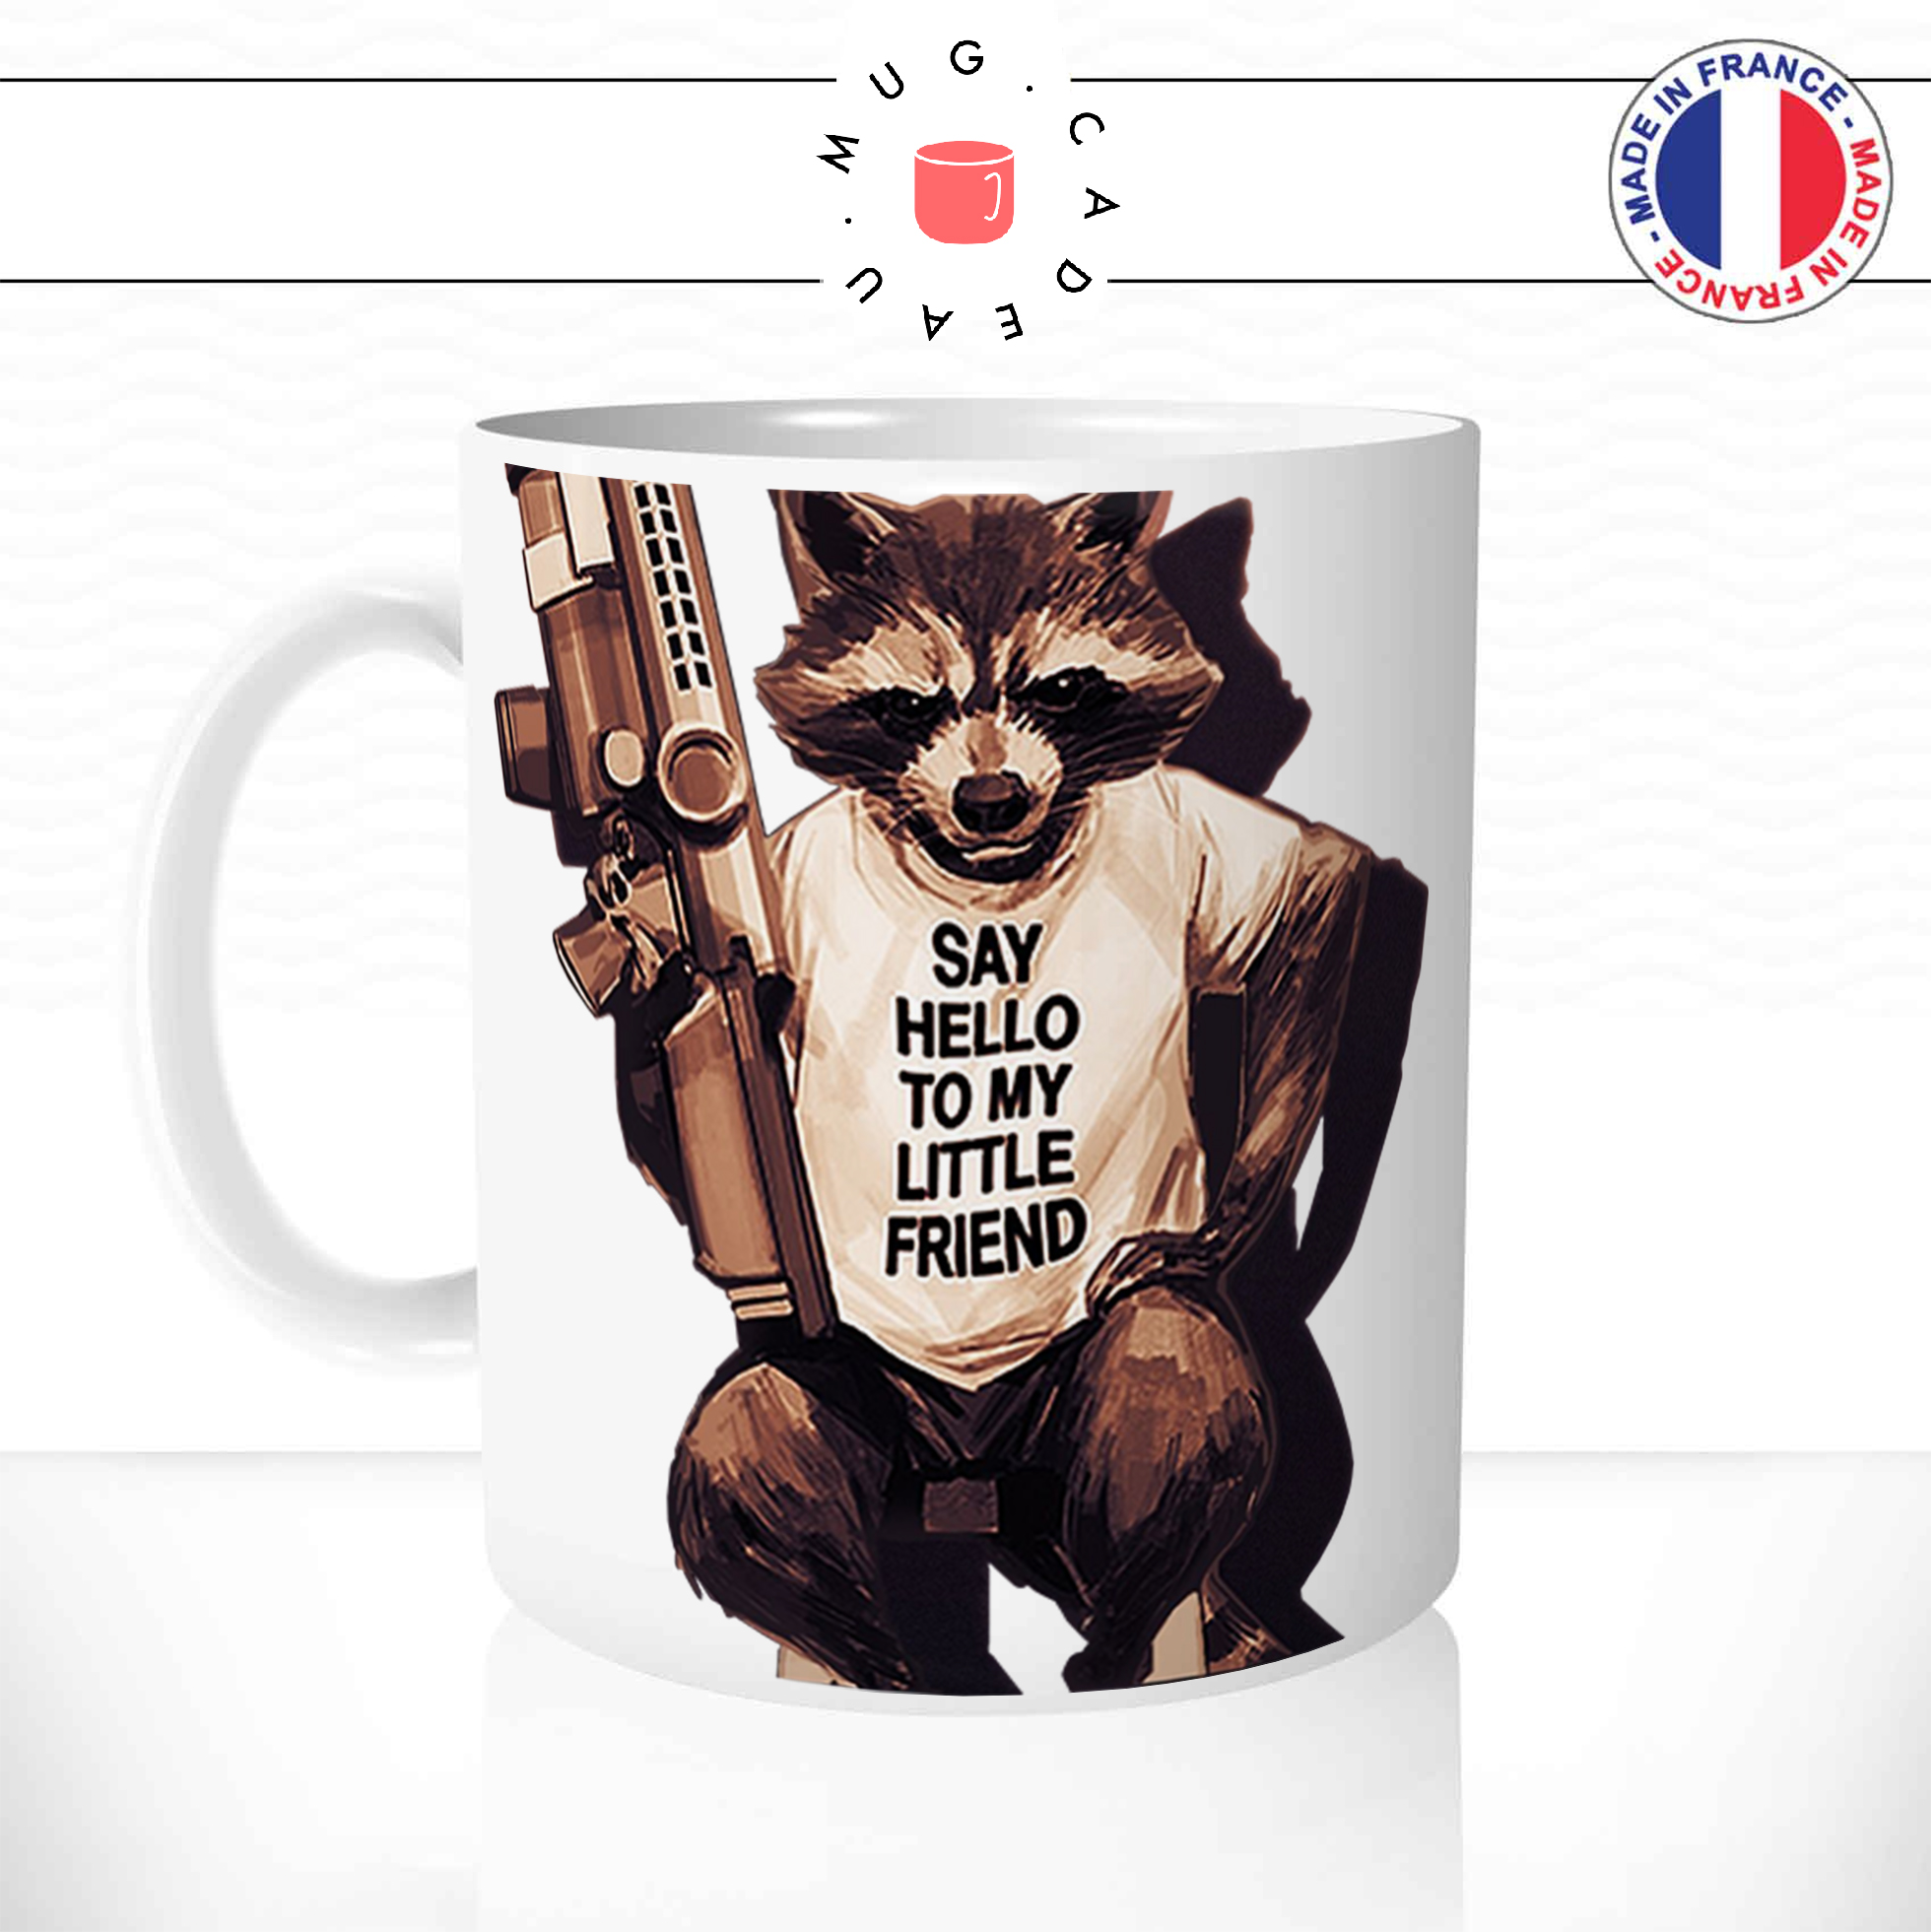 mug-tasse-ref10-gardiens-galaxie-racoon-rocket-fusil-say-hello-to-my-friend-cafe-the-mugs-tasses-personnalise-anse-gauche